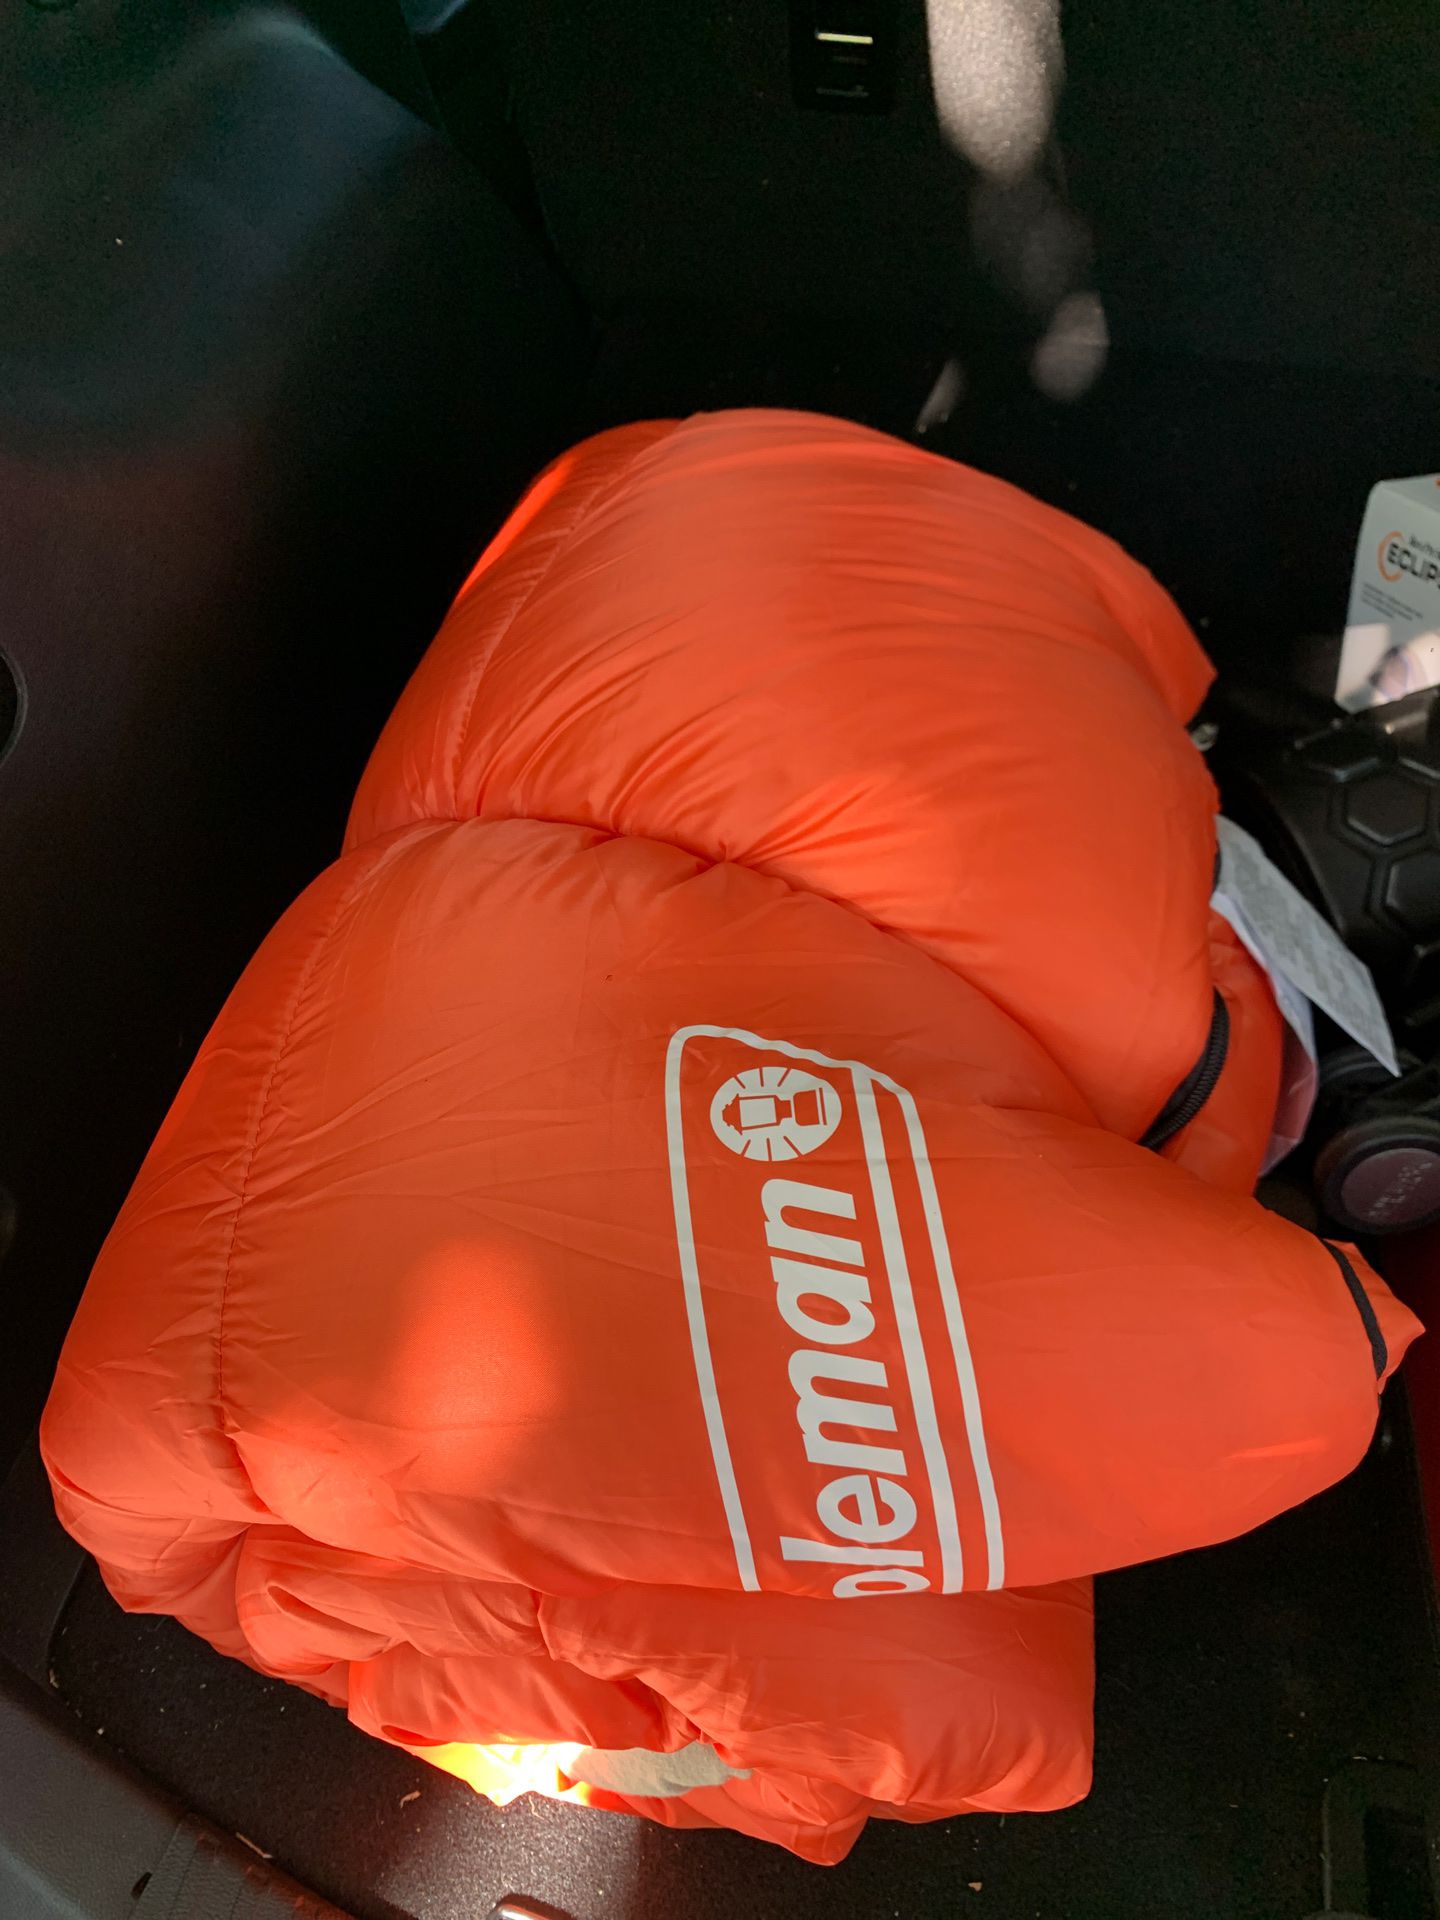 Coleman sleeping bag.